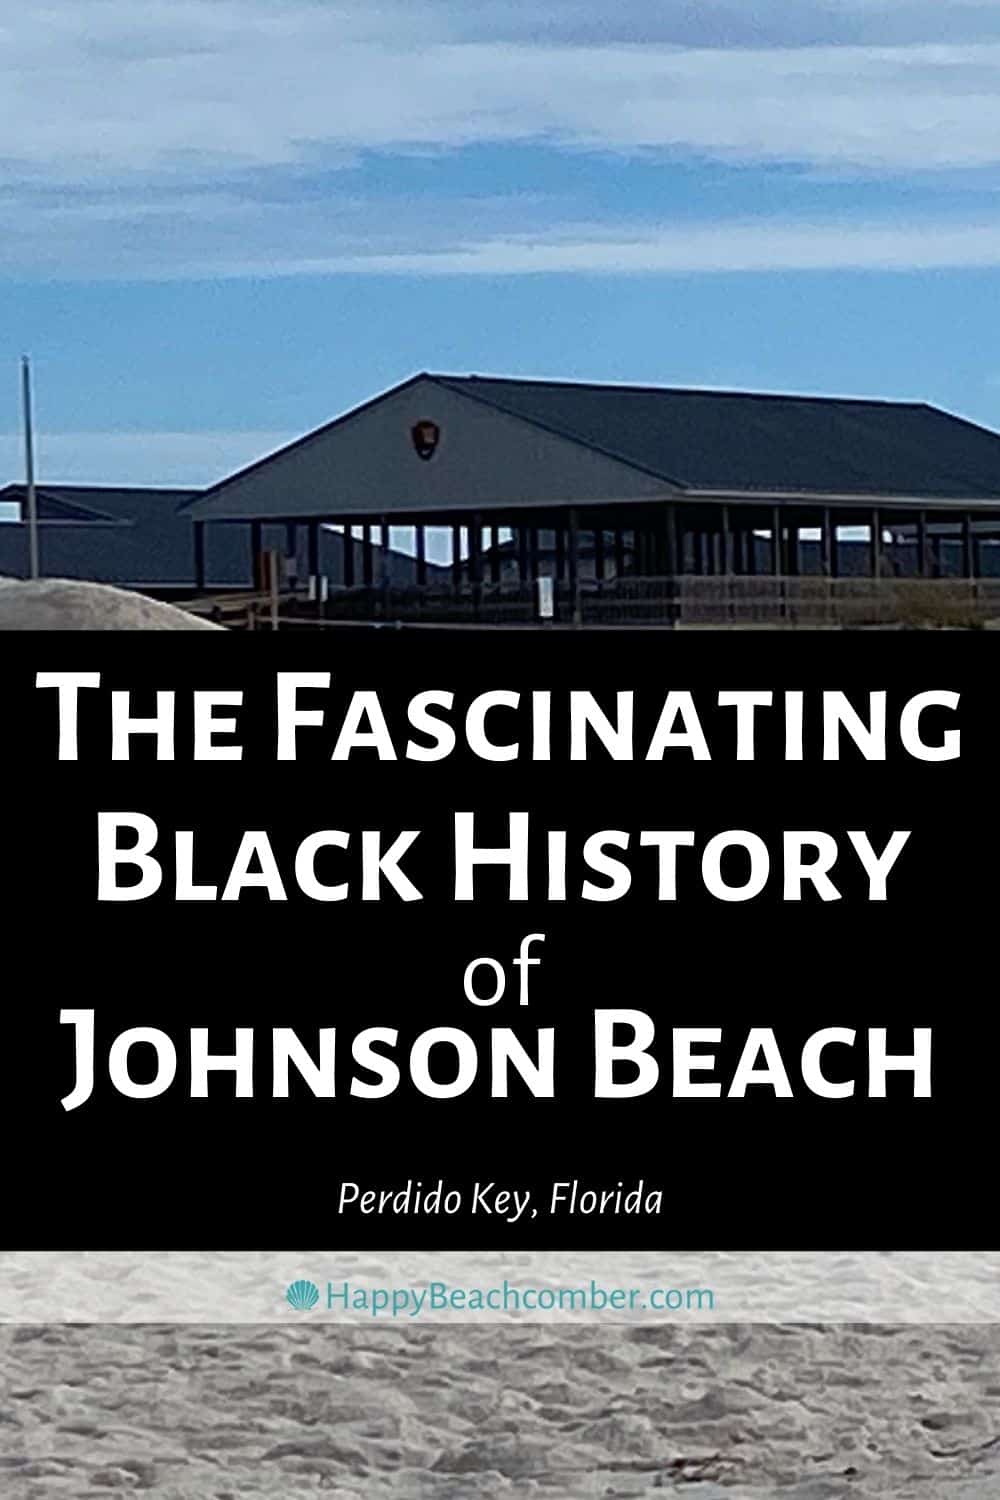 Florida Black History - Johnson Beach